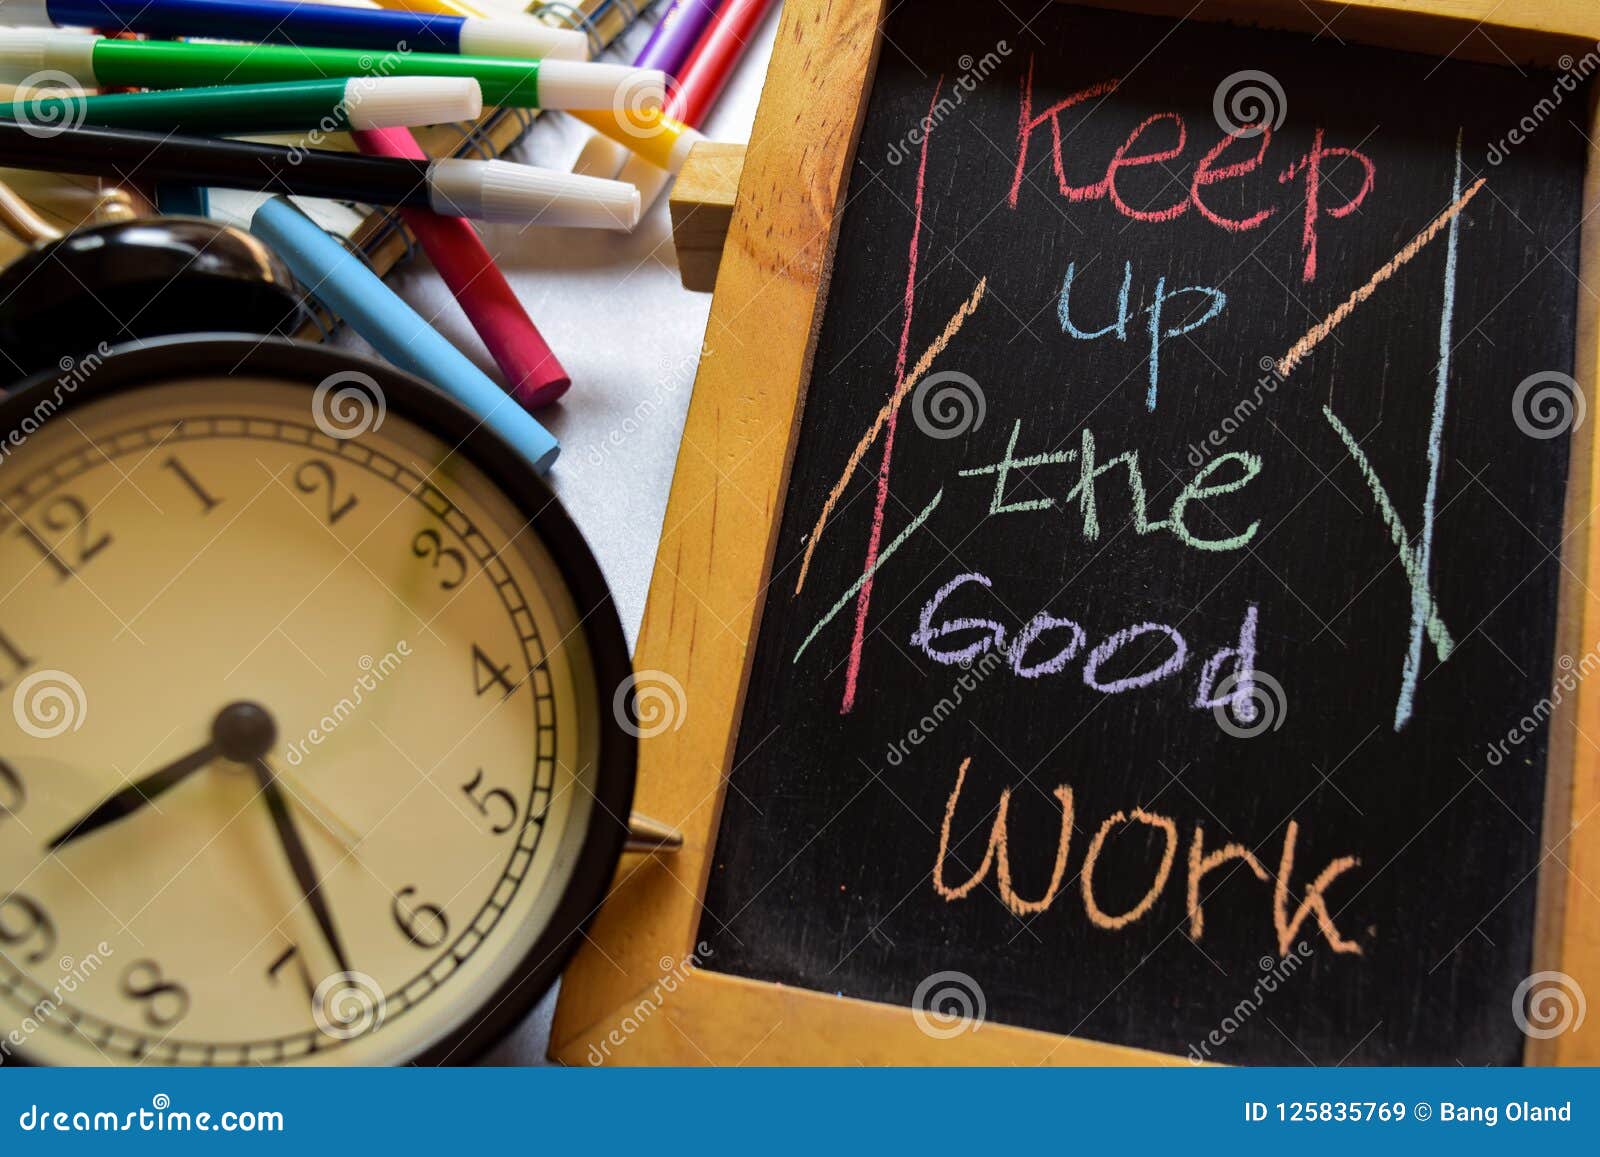 Keep up the good. Keep up the good work. Keep up the good work picture. Keep up the good work images.